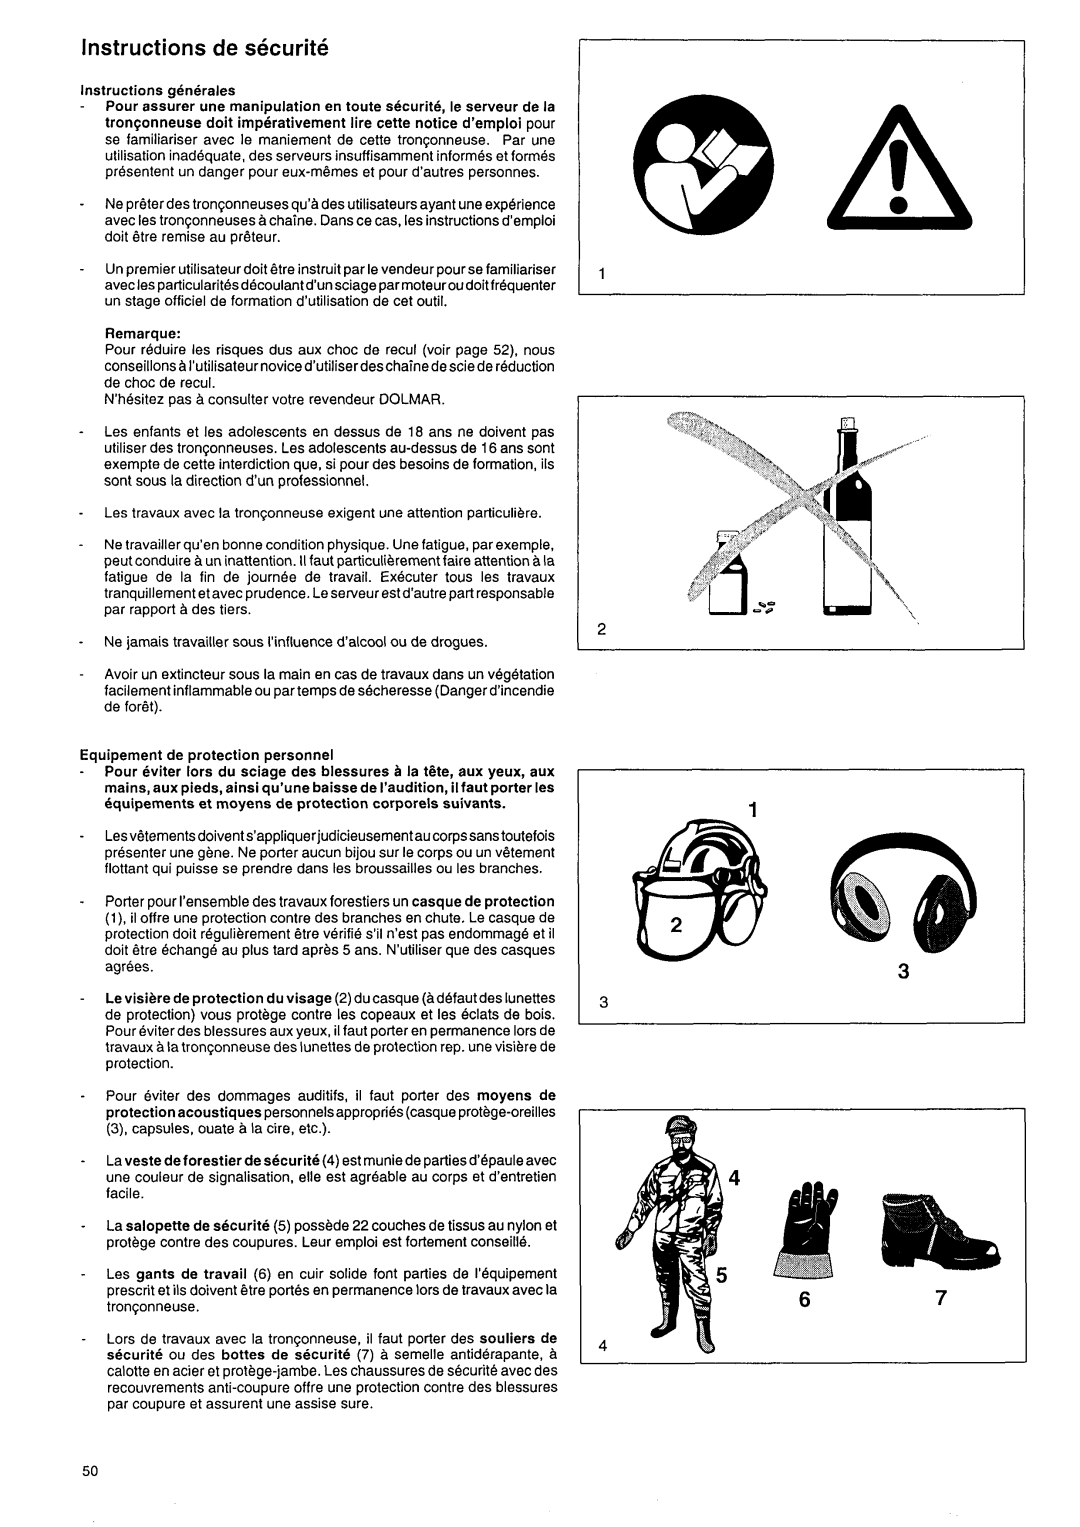 Makita DCS 9000 manual Instructions de securite 